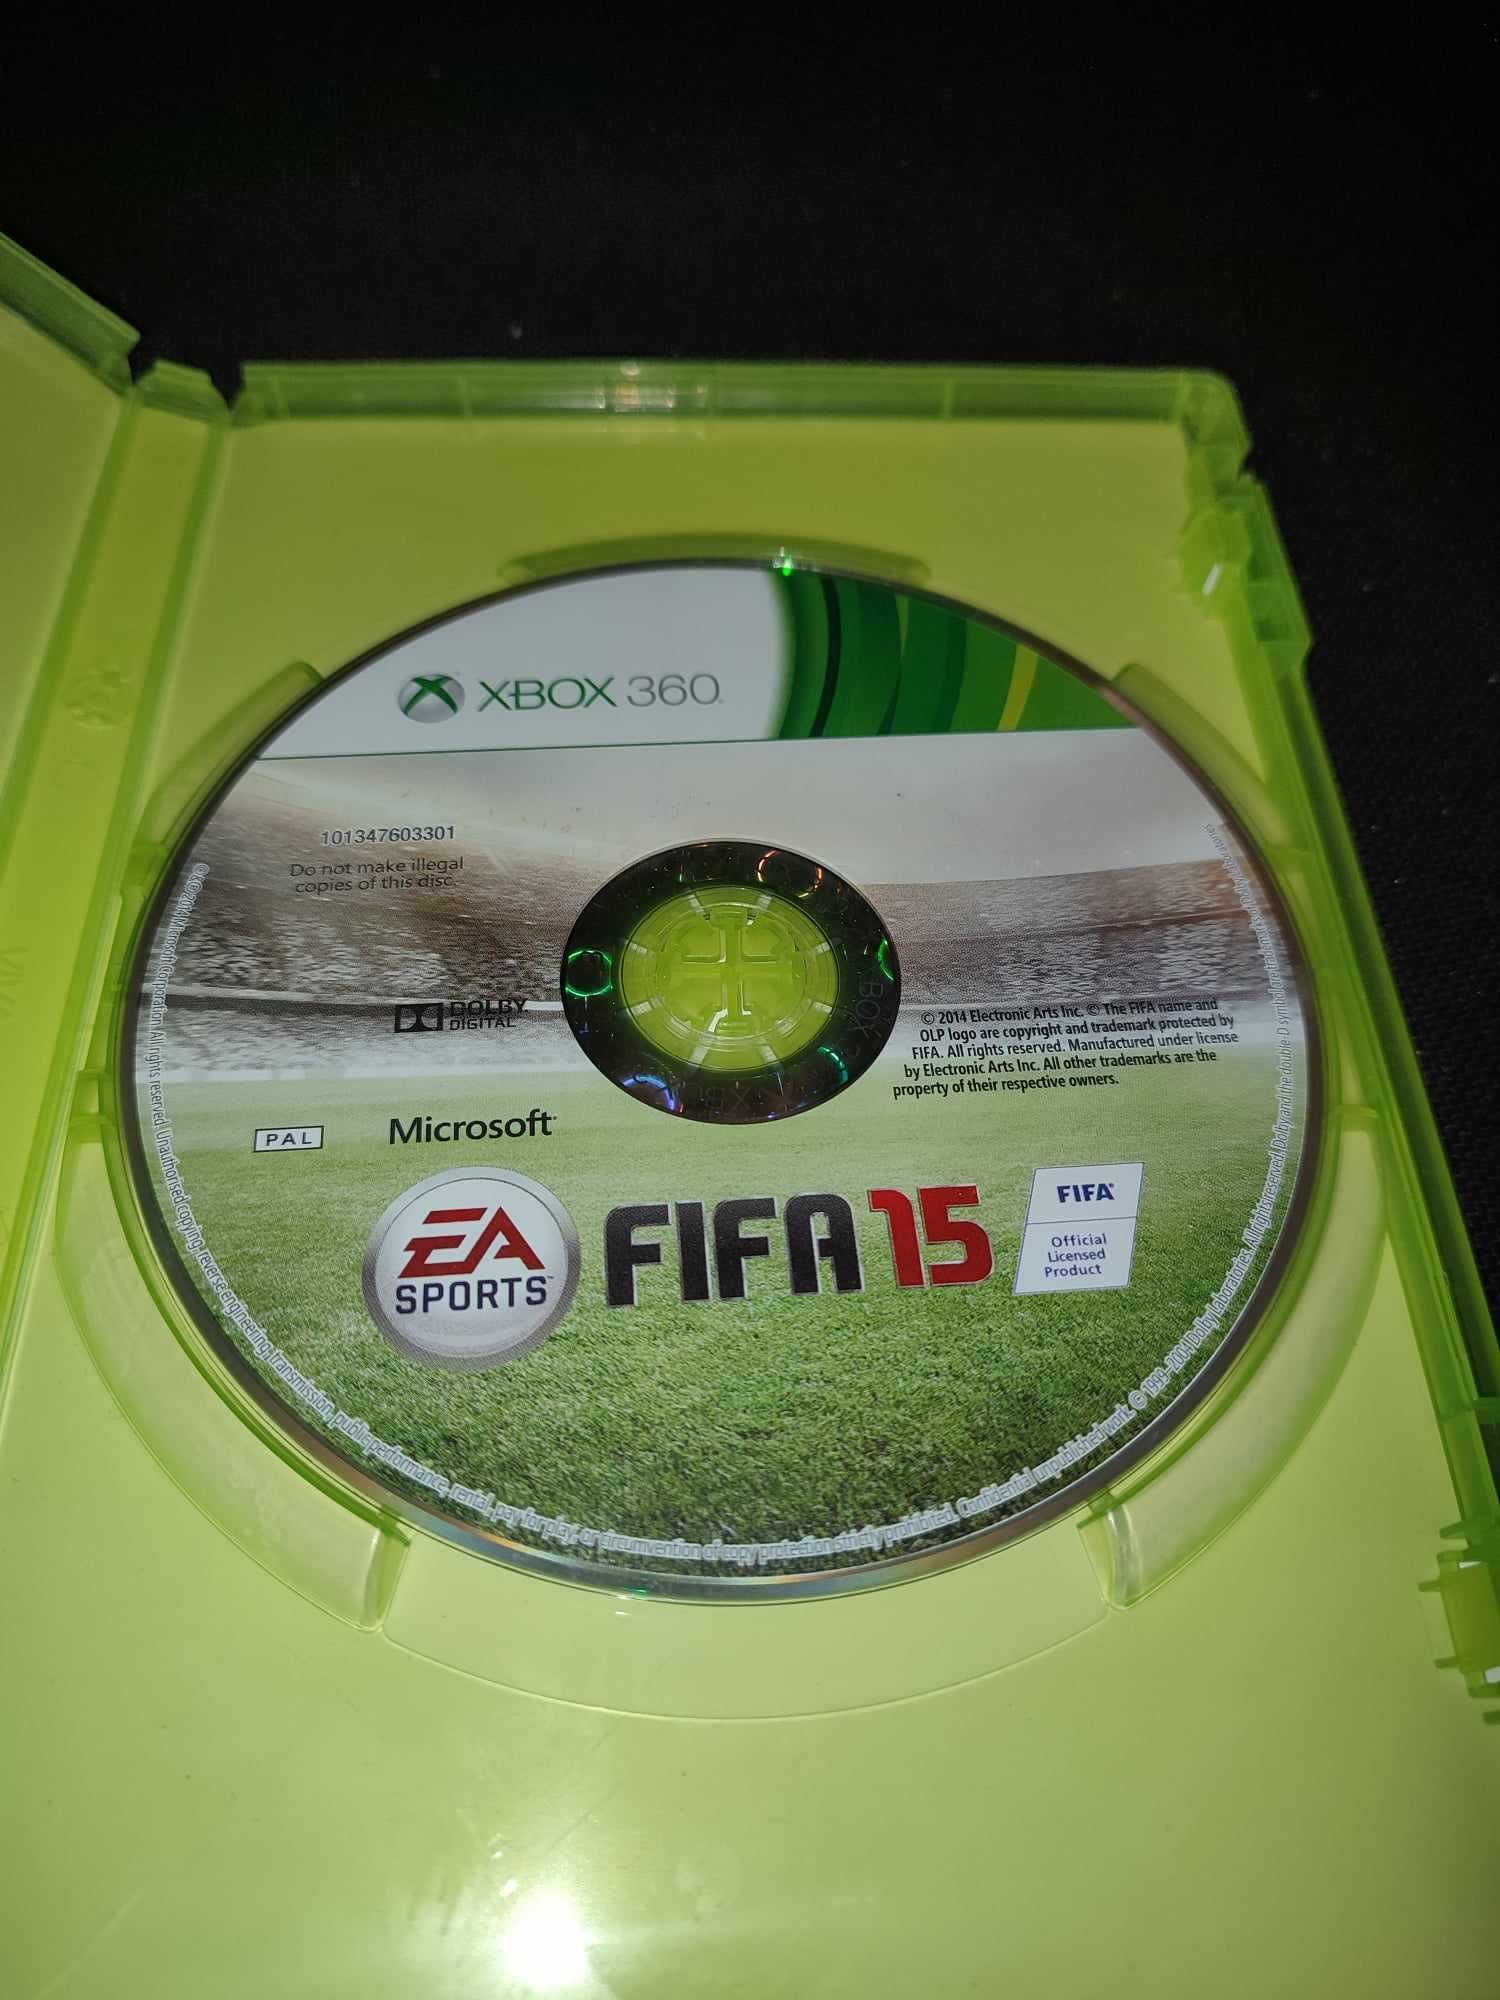 Okazja!!! Gra Fifa 15 na Xbox 360 !!! Polecam!